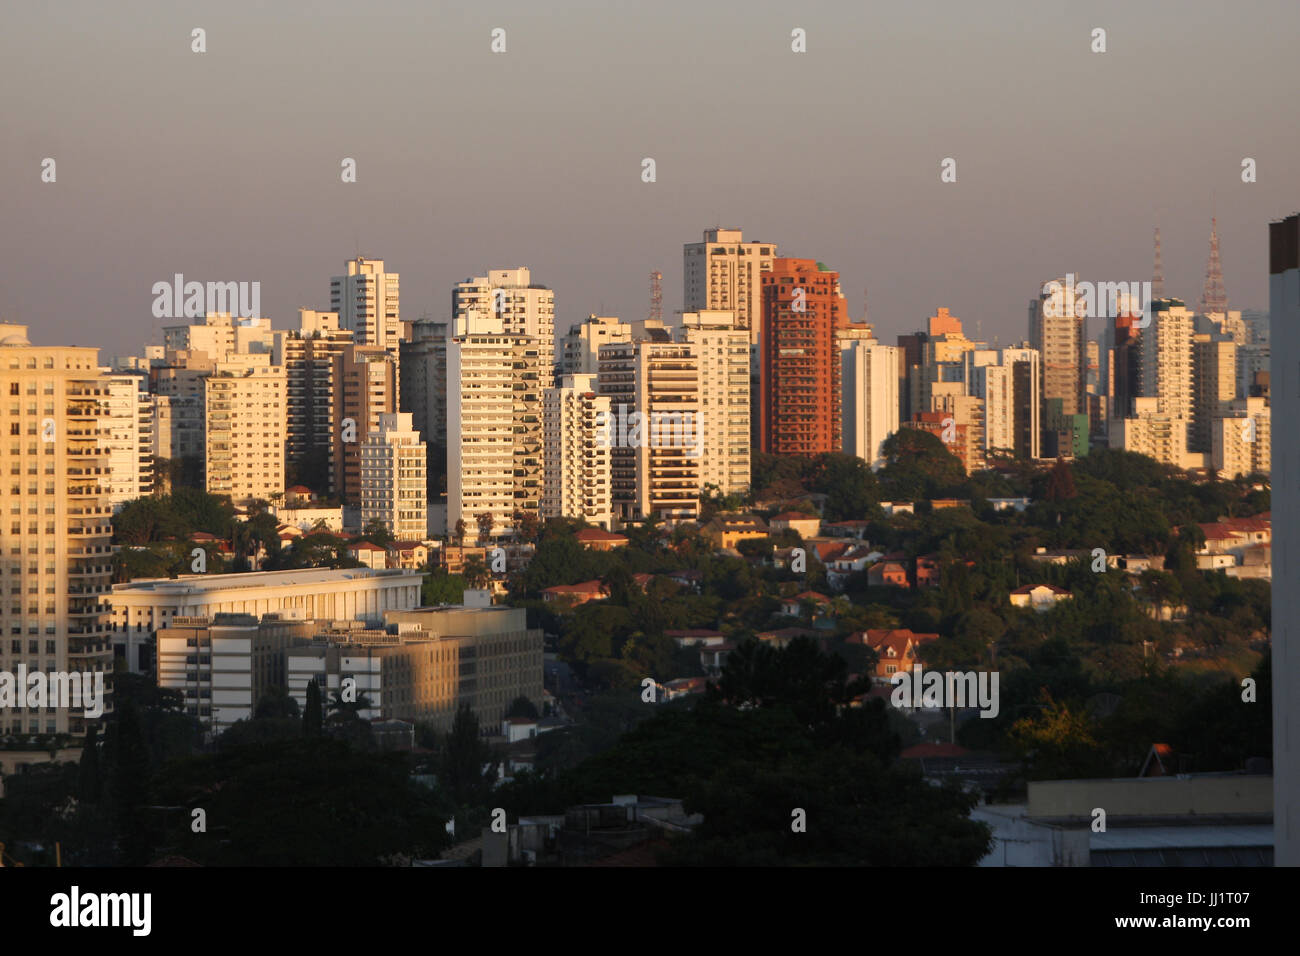 Building, São Paulo, Brazil Stock Photo